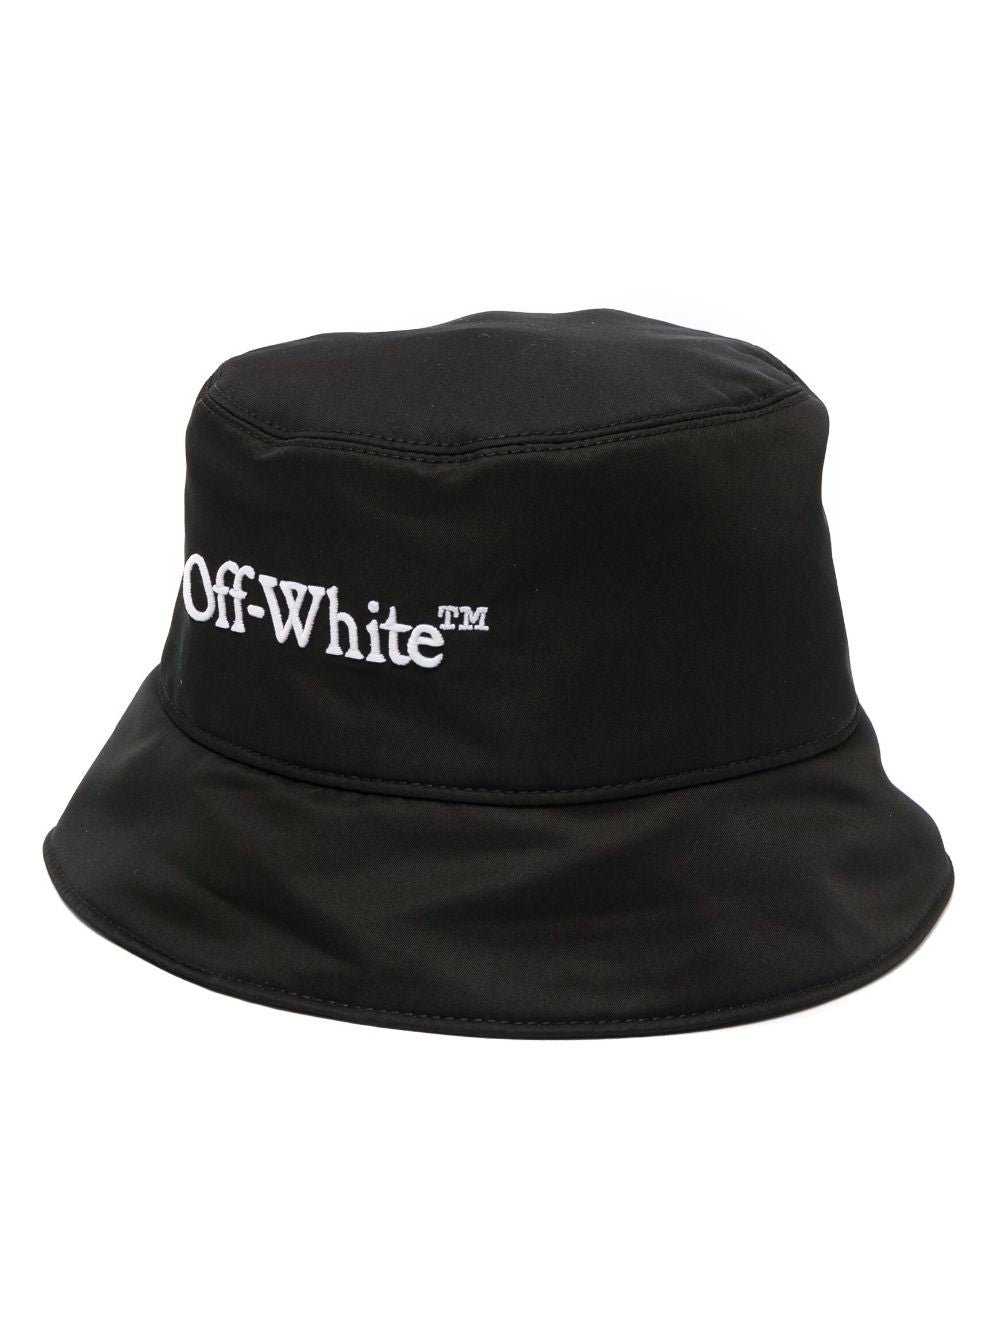 Off White Hats Black-Off White-UNI-Urbanheer